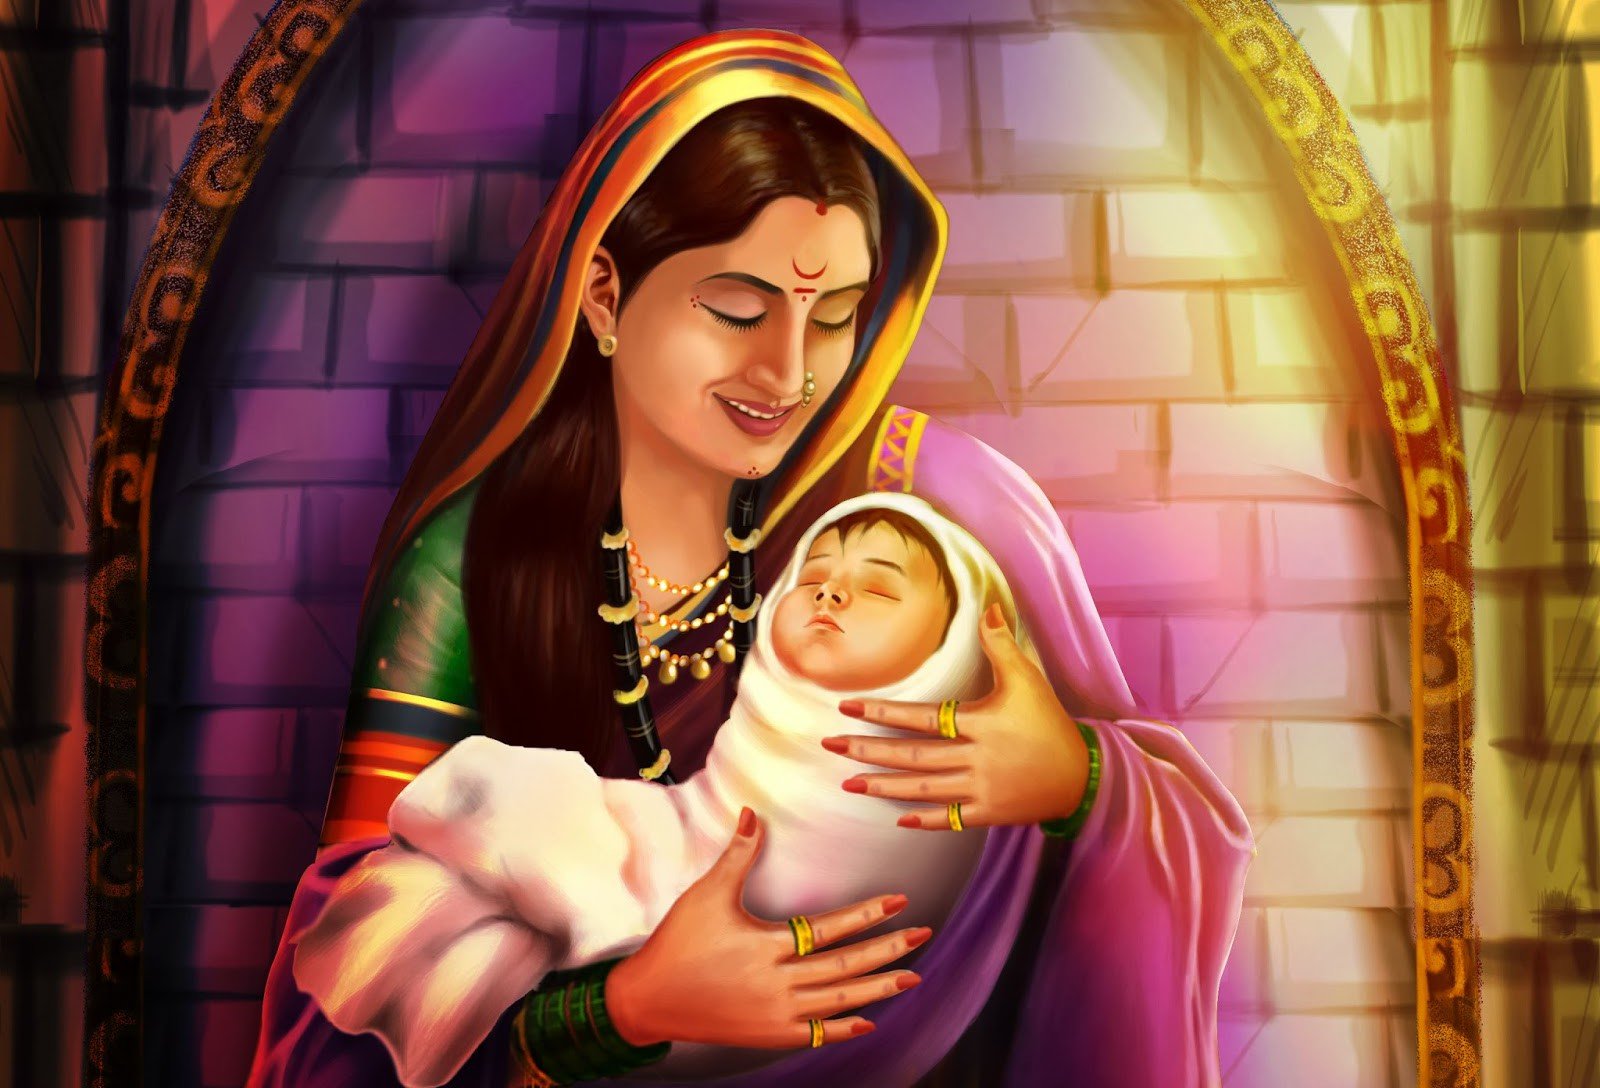 Jijabai gave birth to Shivaji